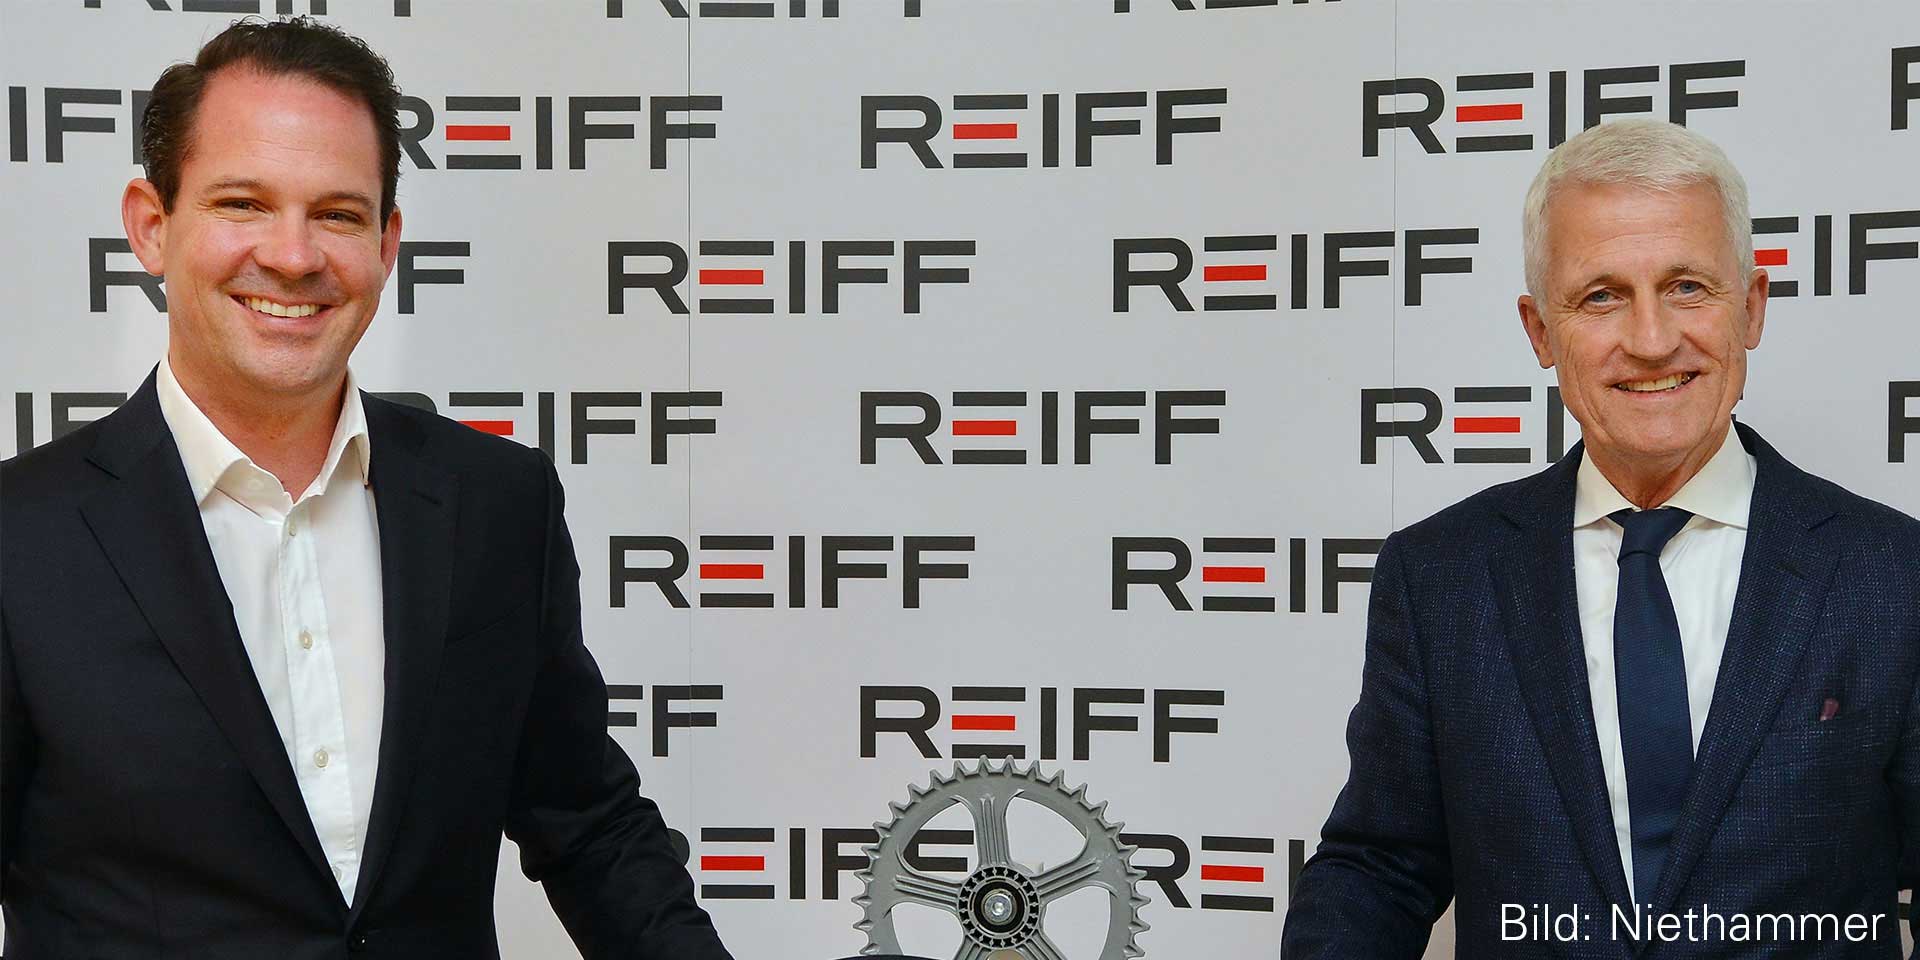 Alec Reiff und Hubert Reiff vor technischem Produkt Sortiment, REIFF Technische Produkte Reutlingen